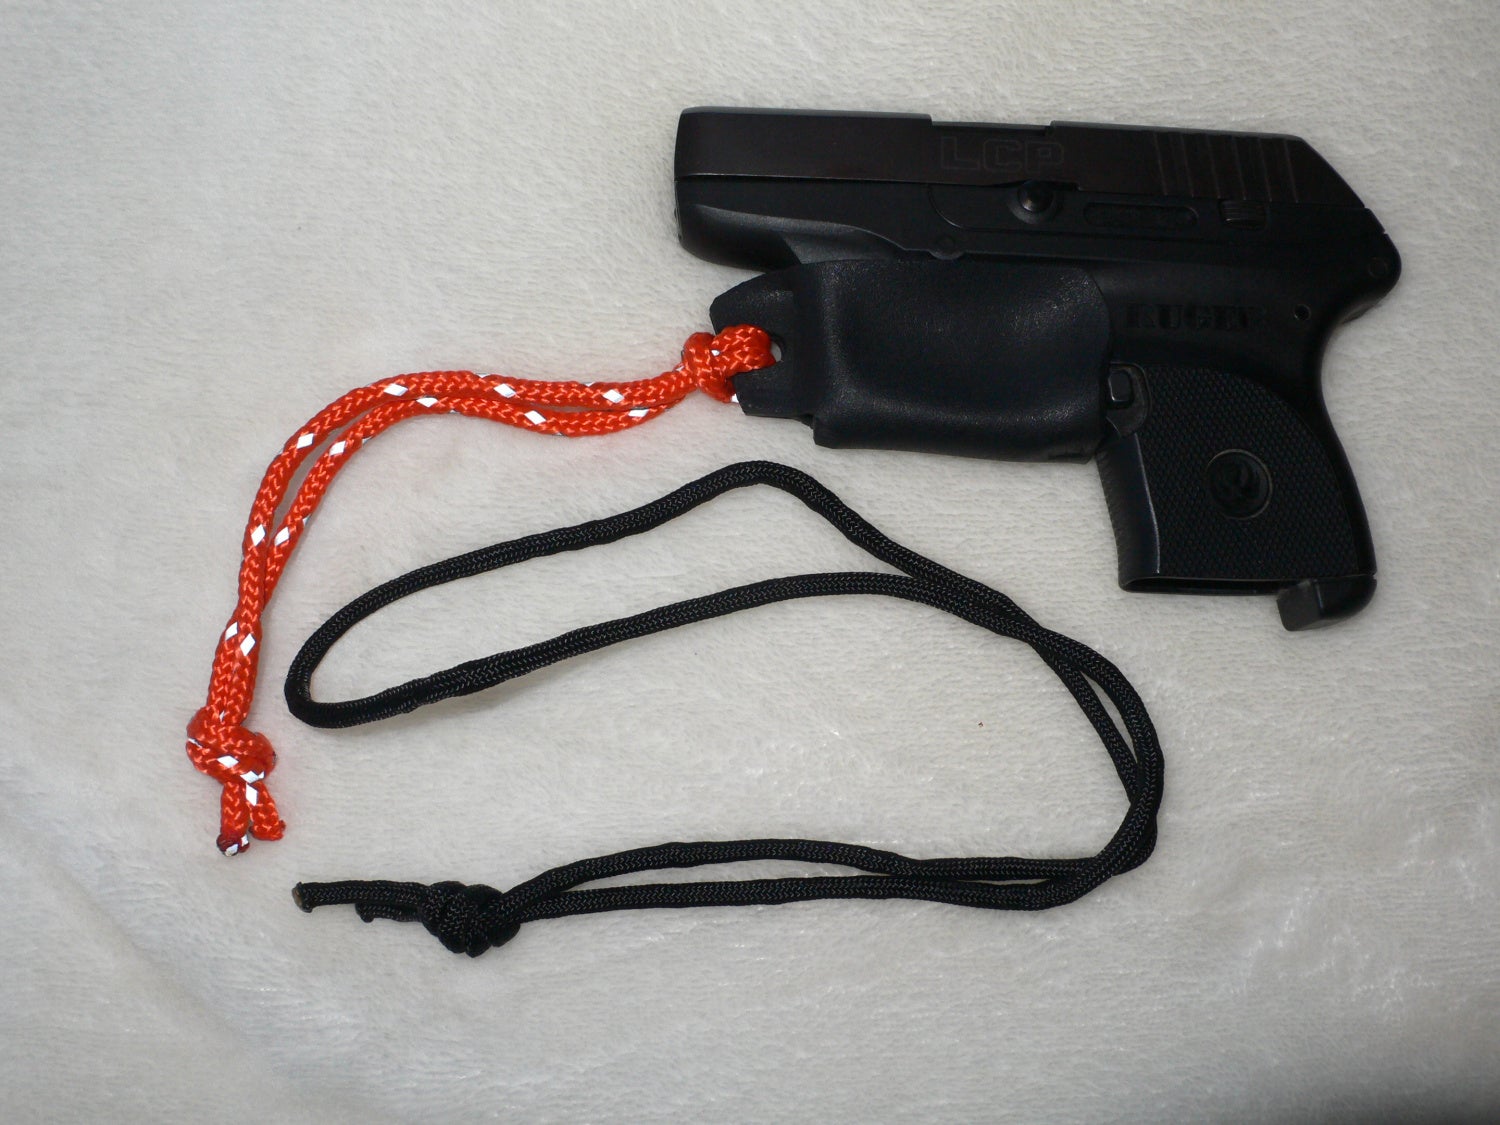 DIY kydex trigger guard holsters